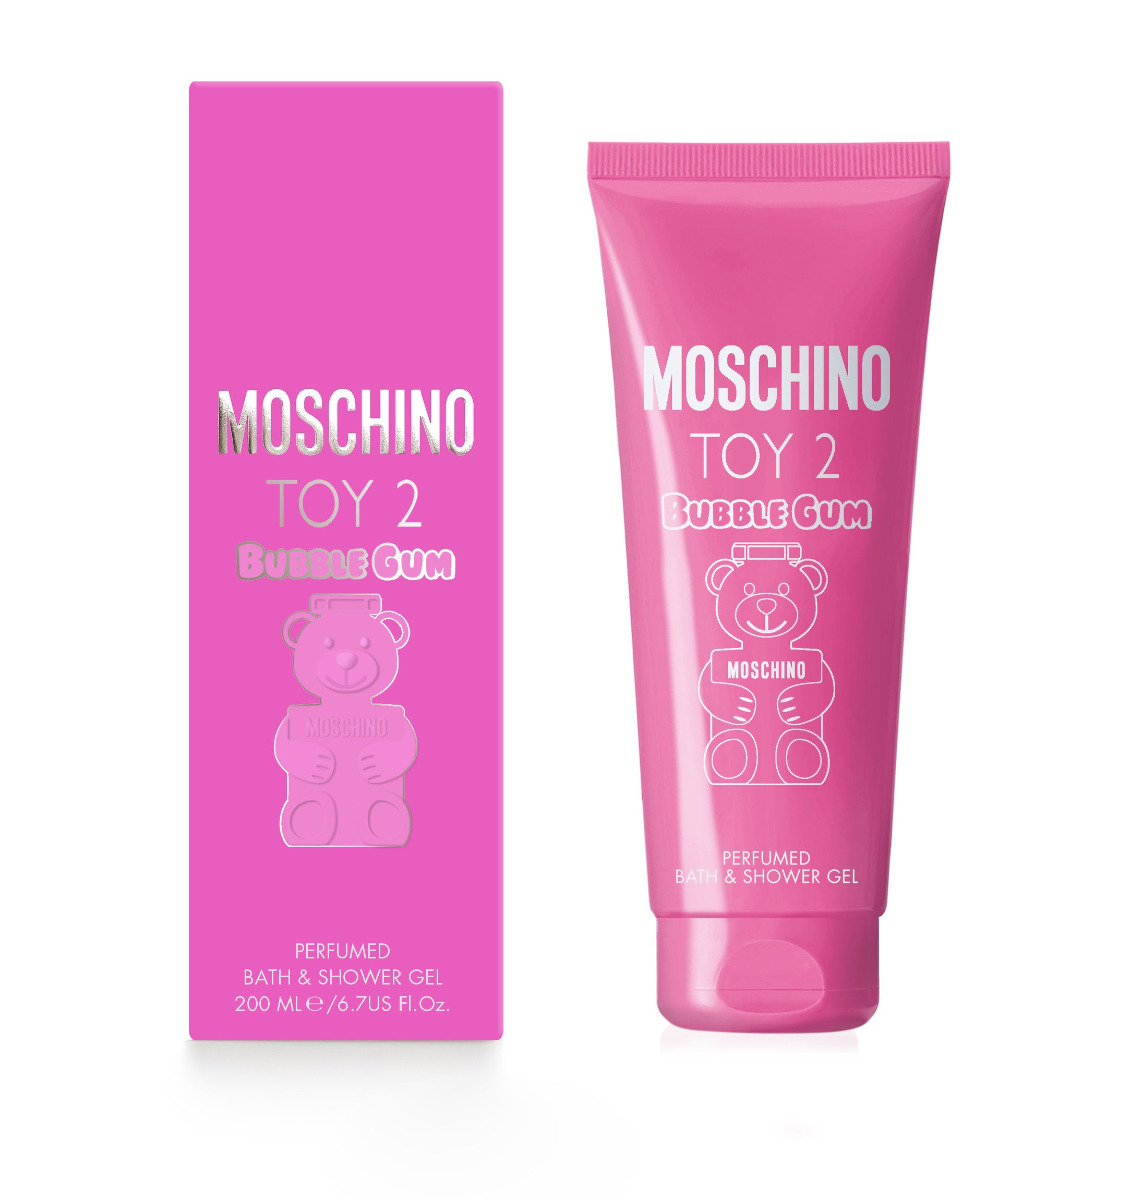 MOSCHINO Toy2 Bubble Gum Bath & Shower Gel 200 ml MOSCHINO